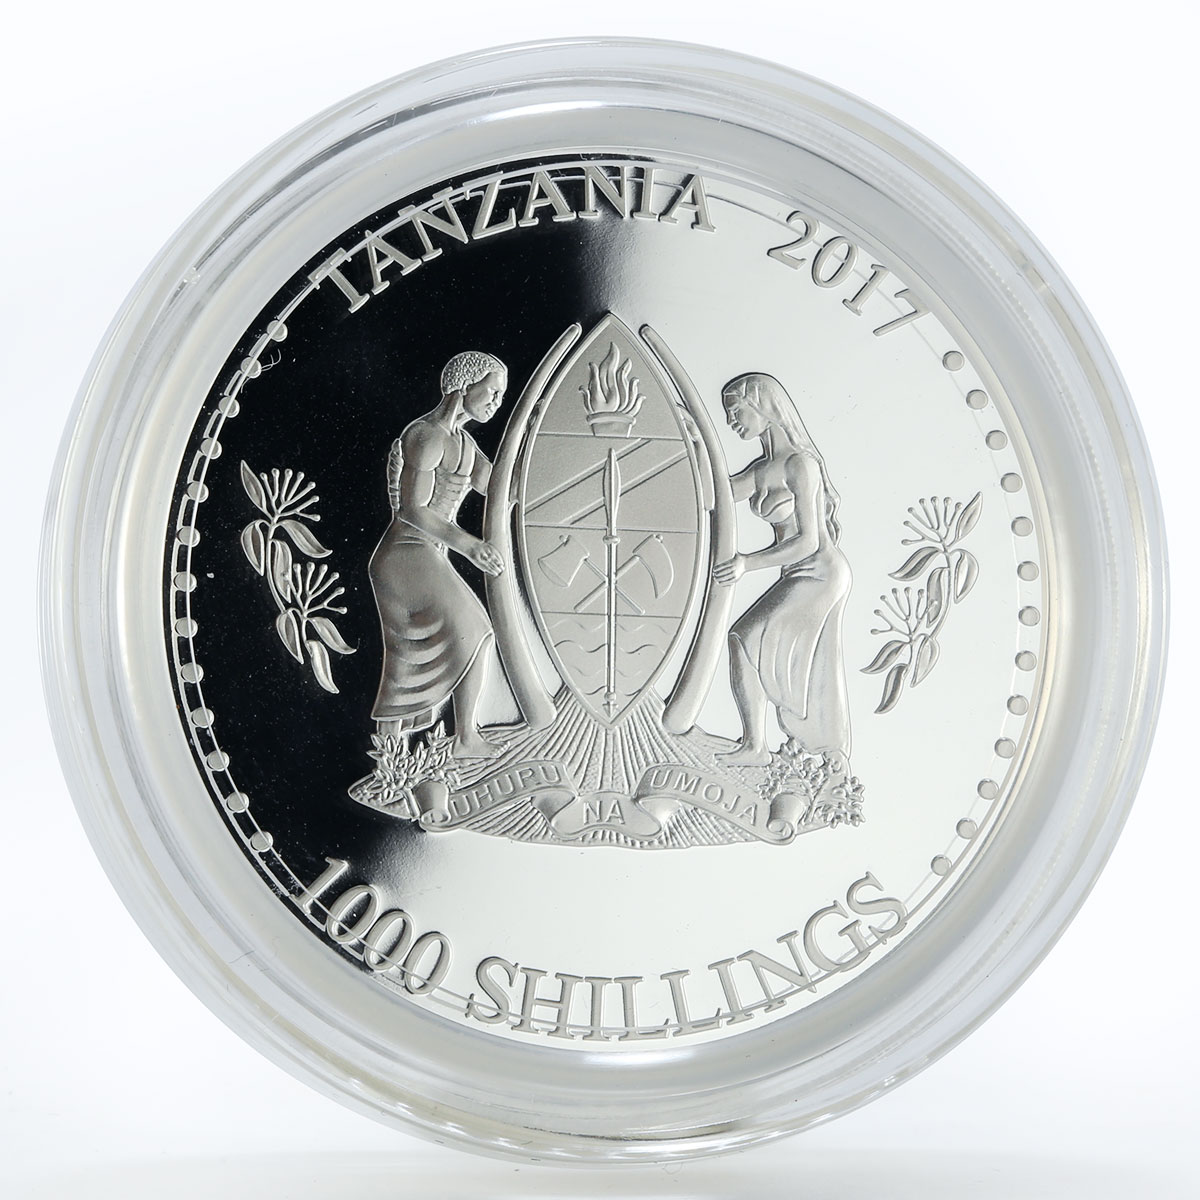 Tanzania set 2 coins Evolution of the Calendar colored silver 2017